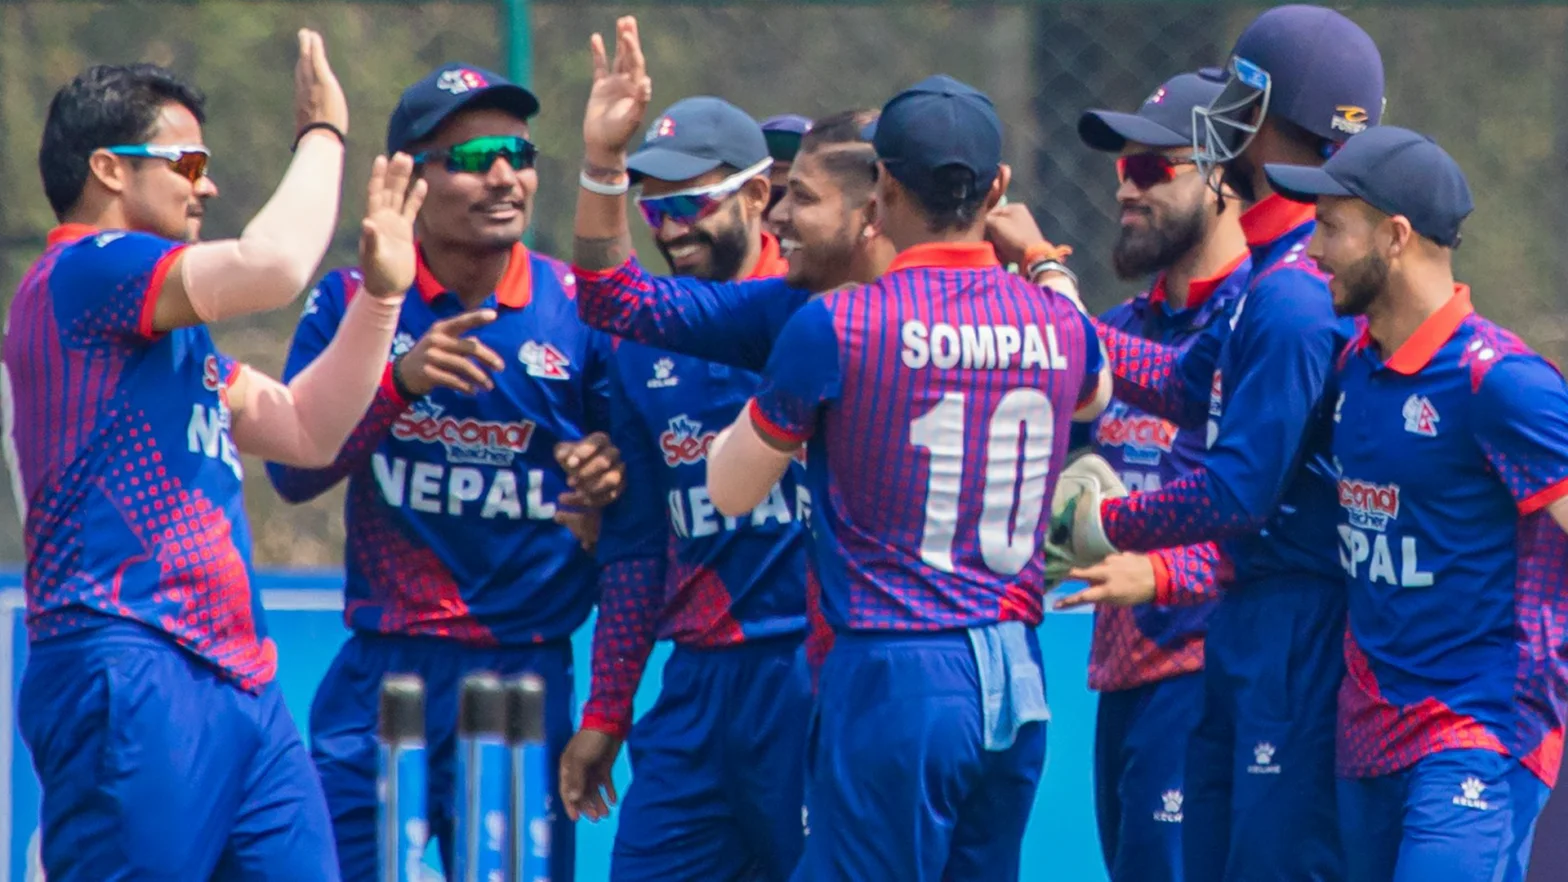 Nepal-team-1568x882.webp